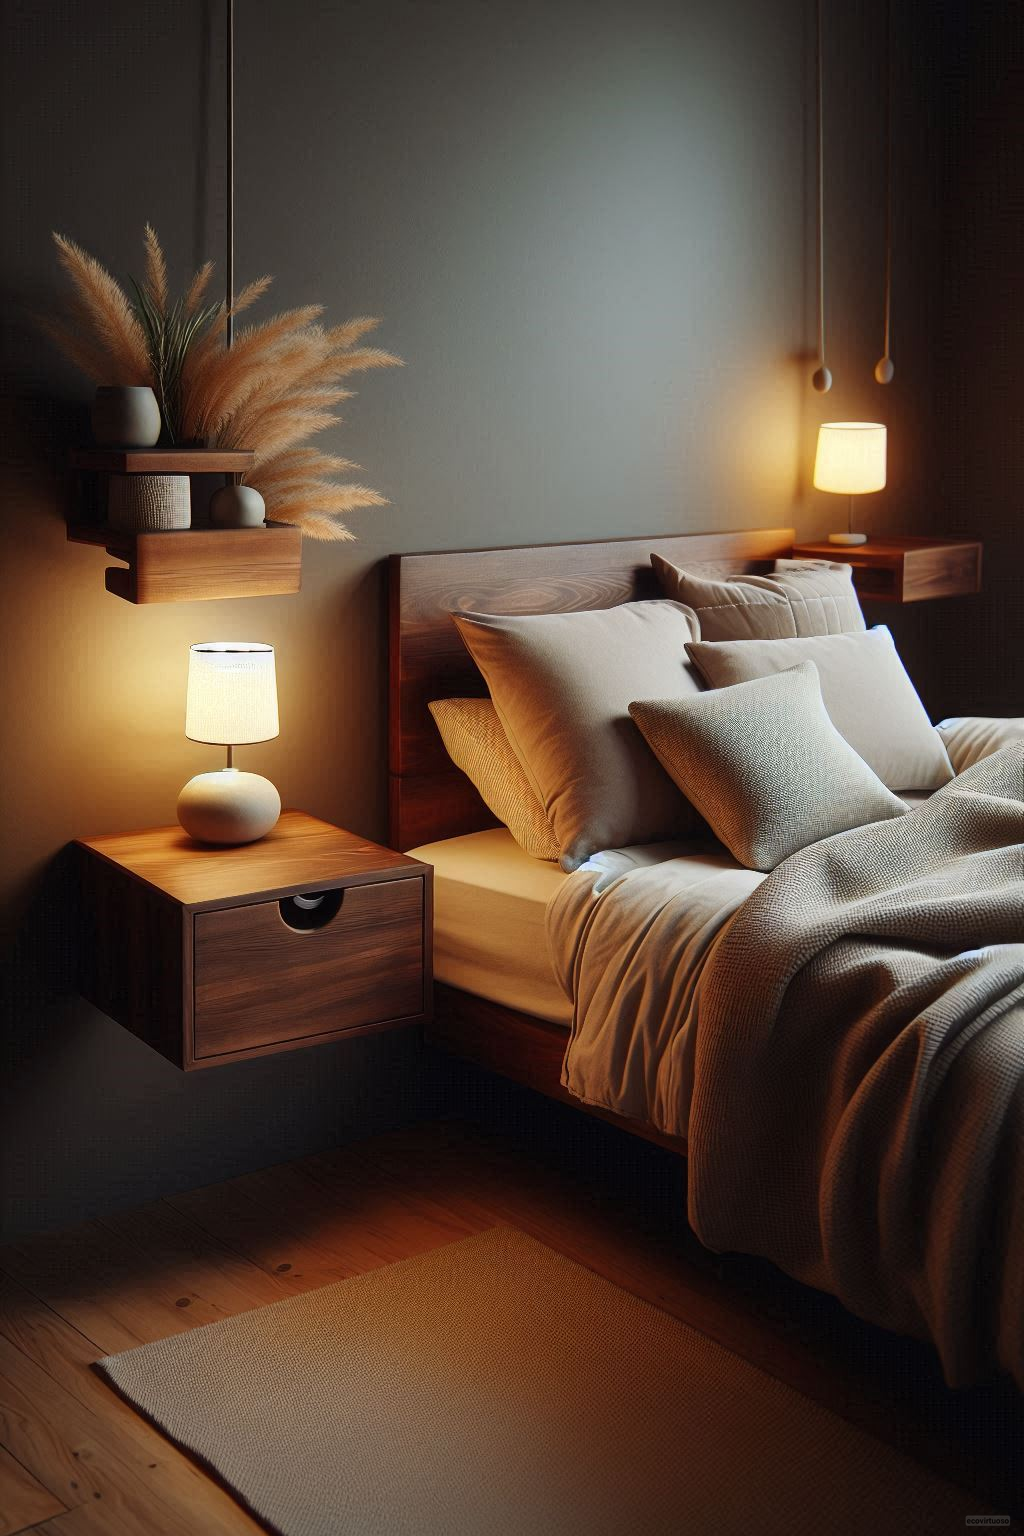 floating nightstands inside a bedroom